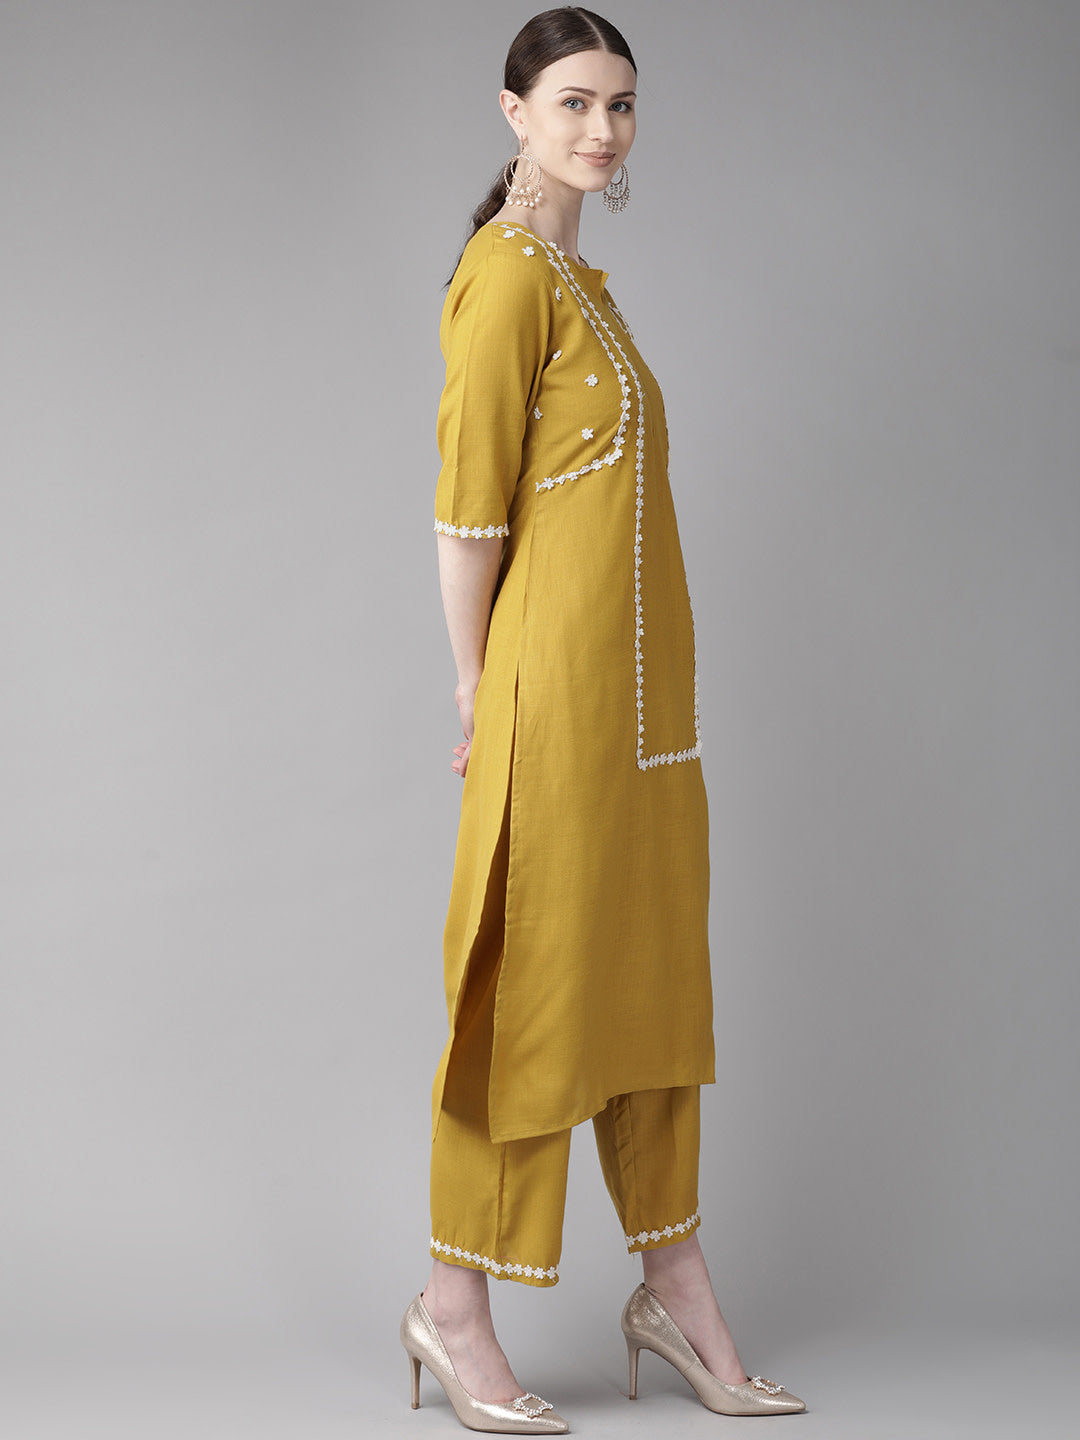 Bhama Couture Mustard Yellow Yoke Design Kurta With Palazzos